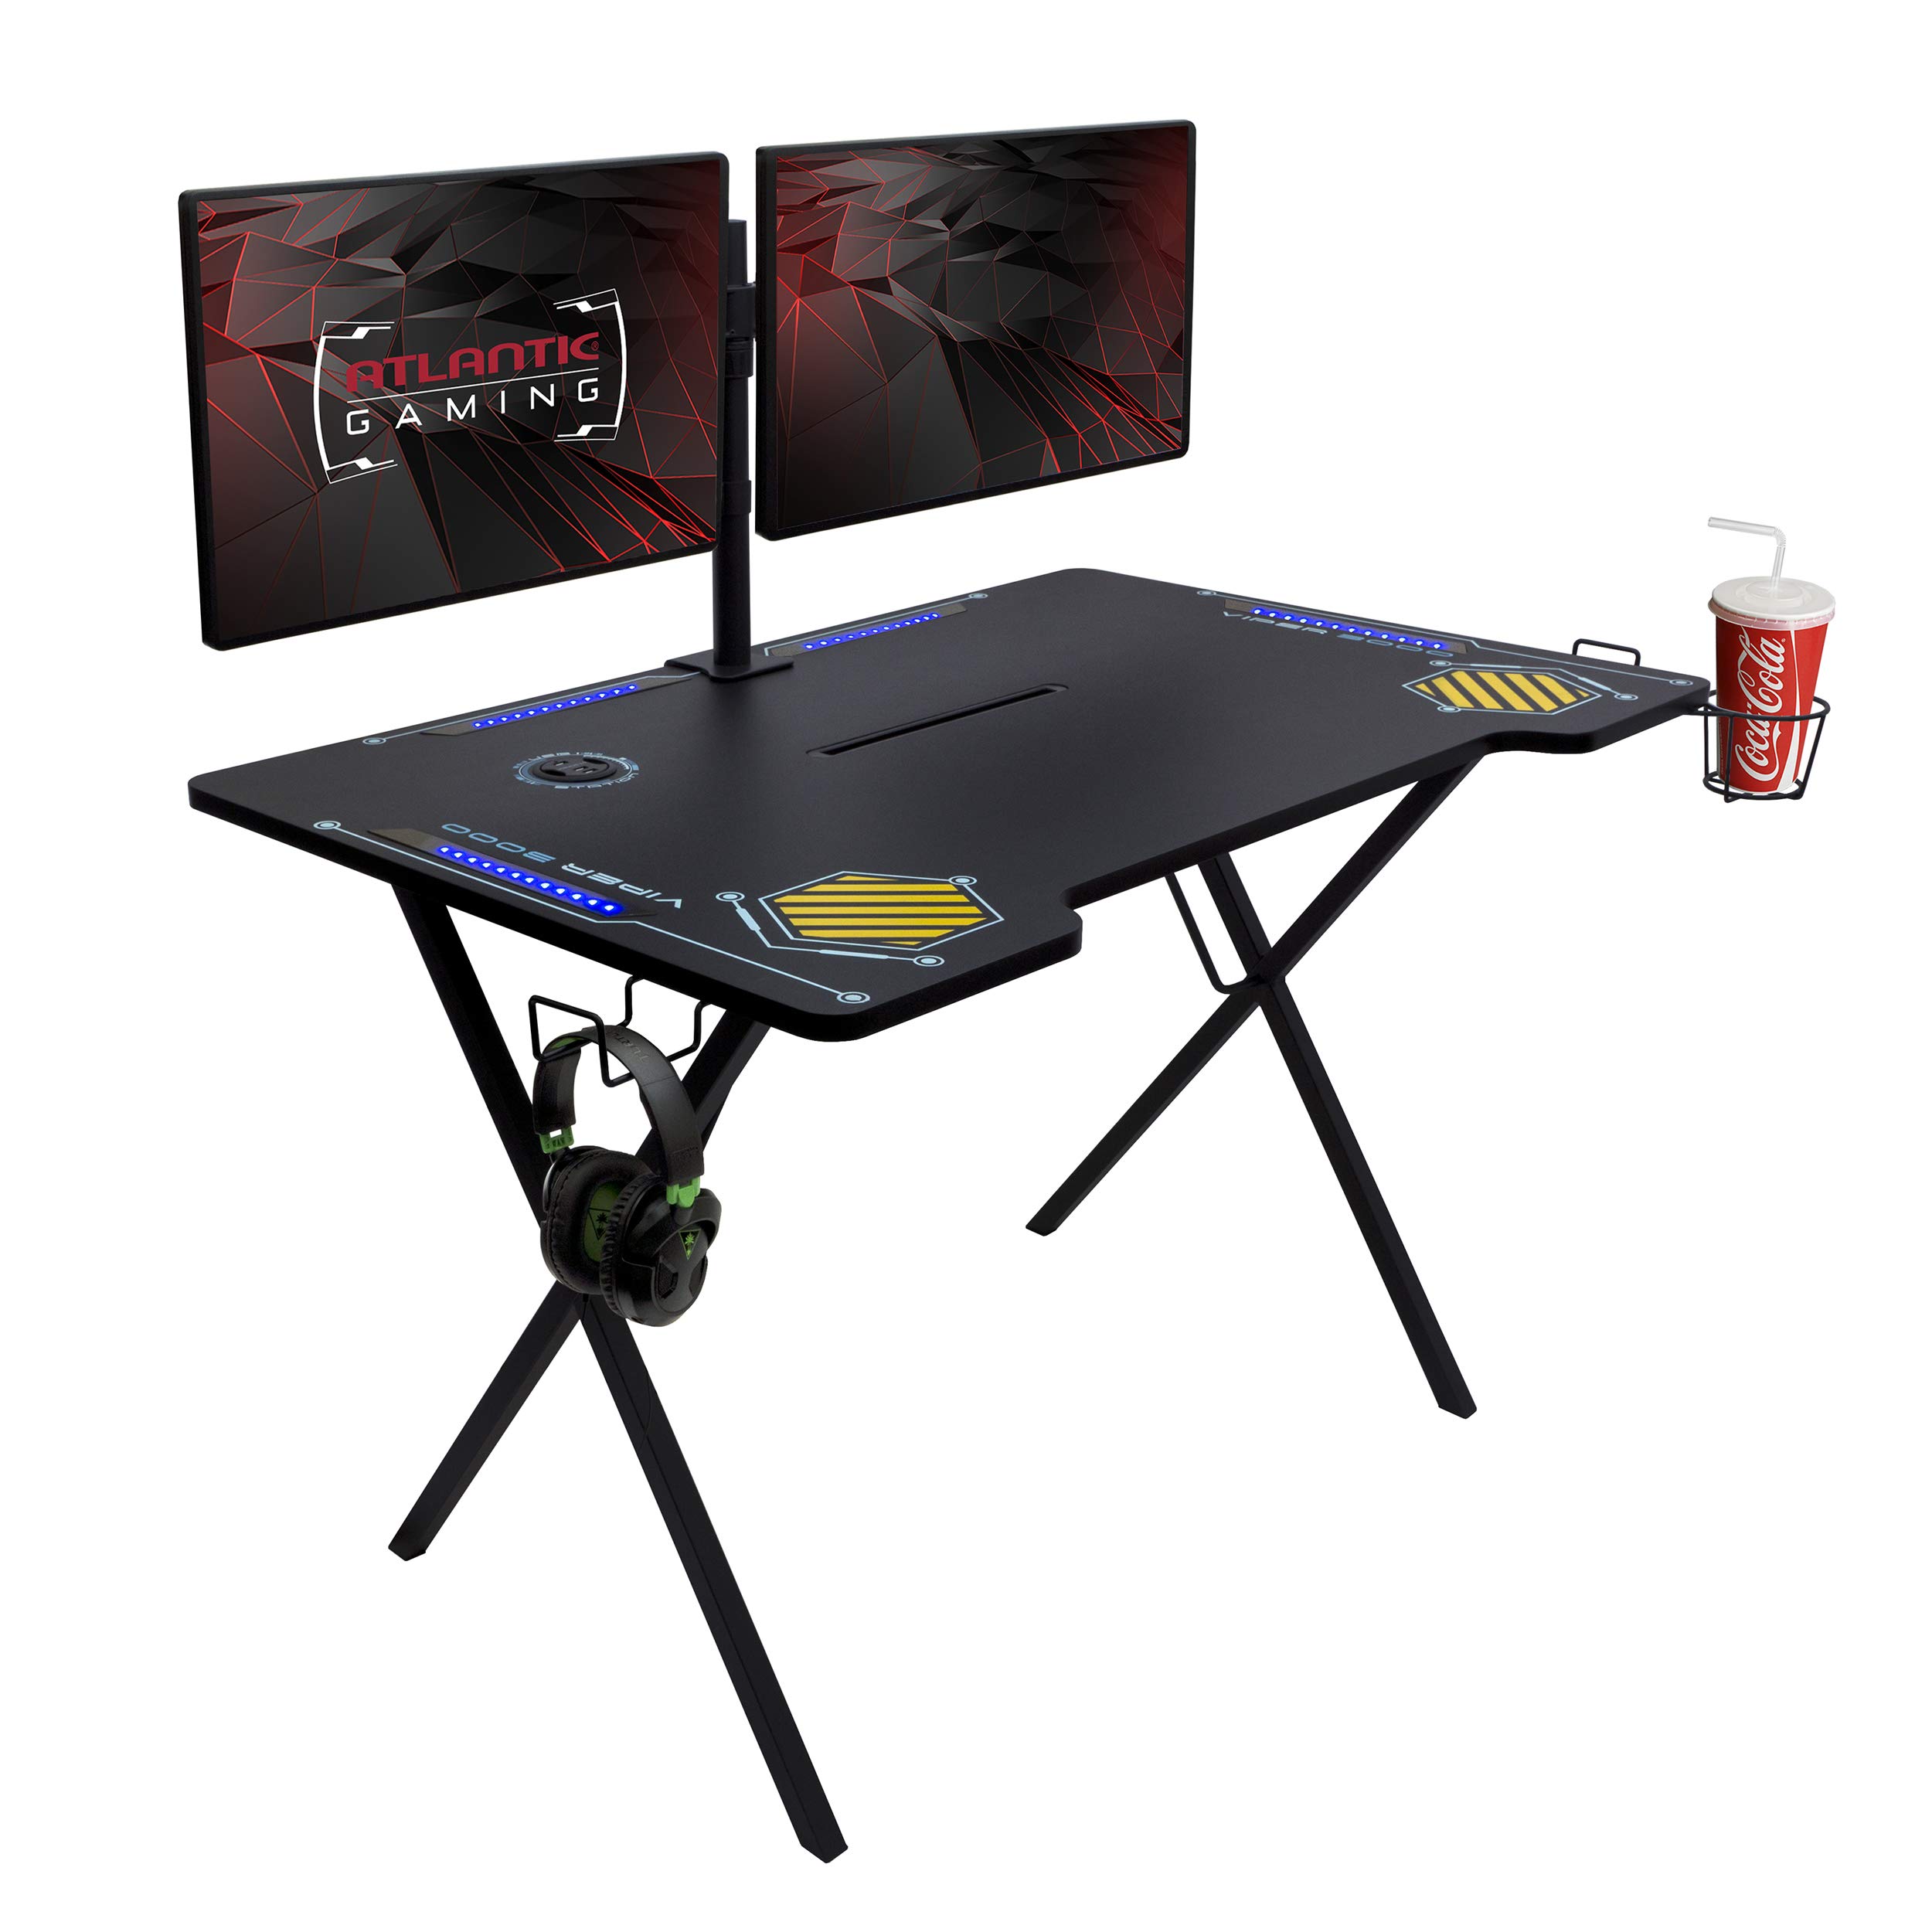 Atlantic Viper 3000 Gaming Desk w/ LED Lights $77 + Free Shipping